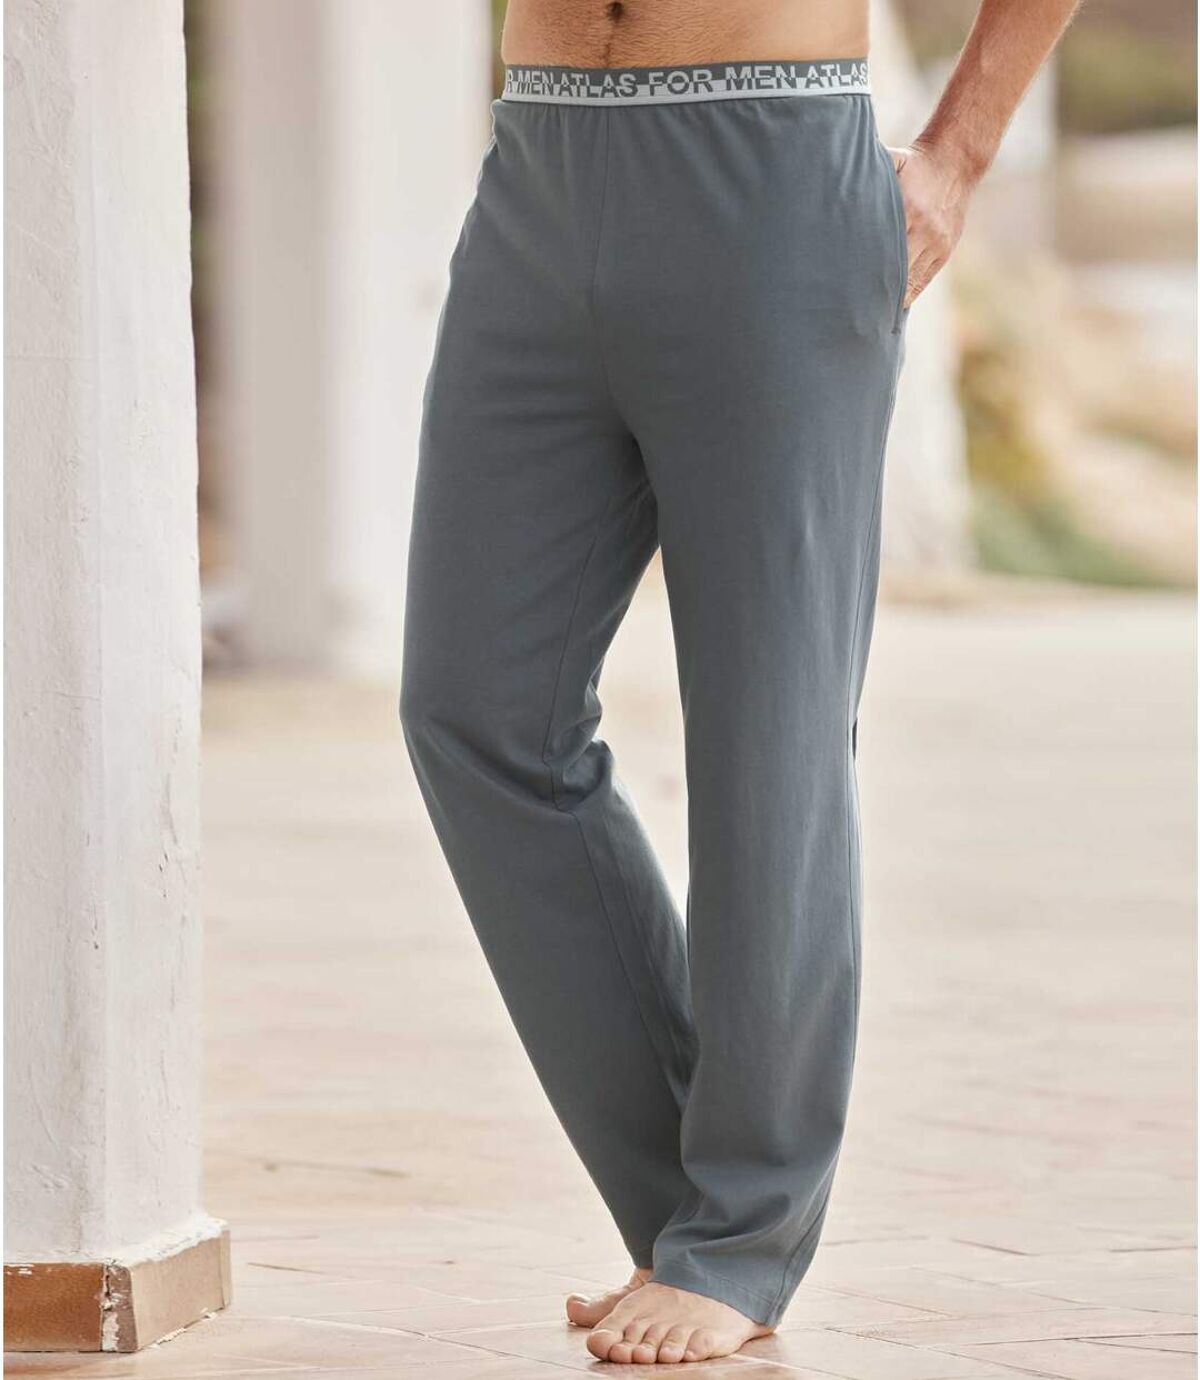 Men's Gray Lounge Pants Atlas For Men